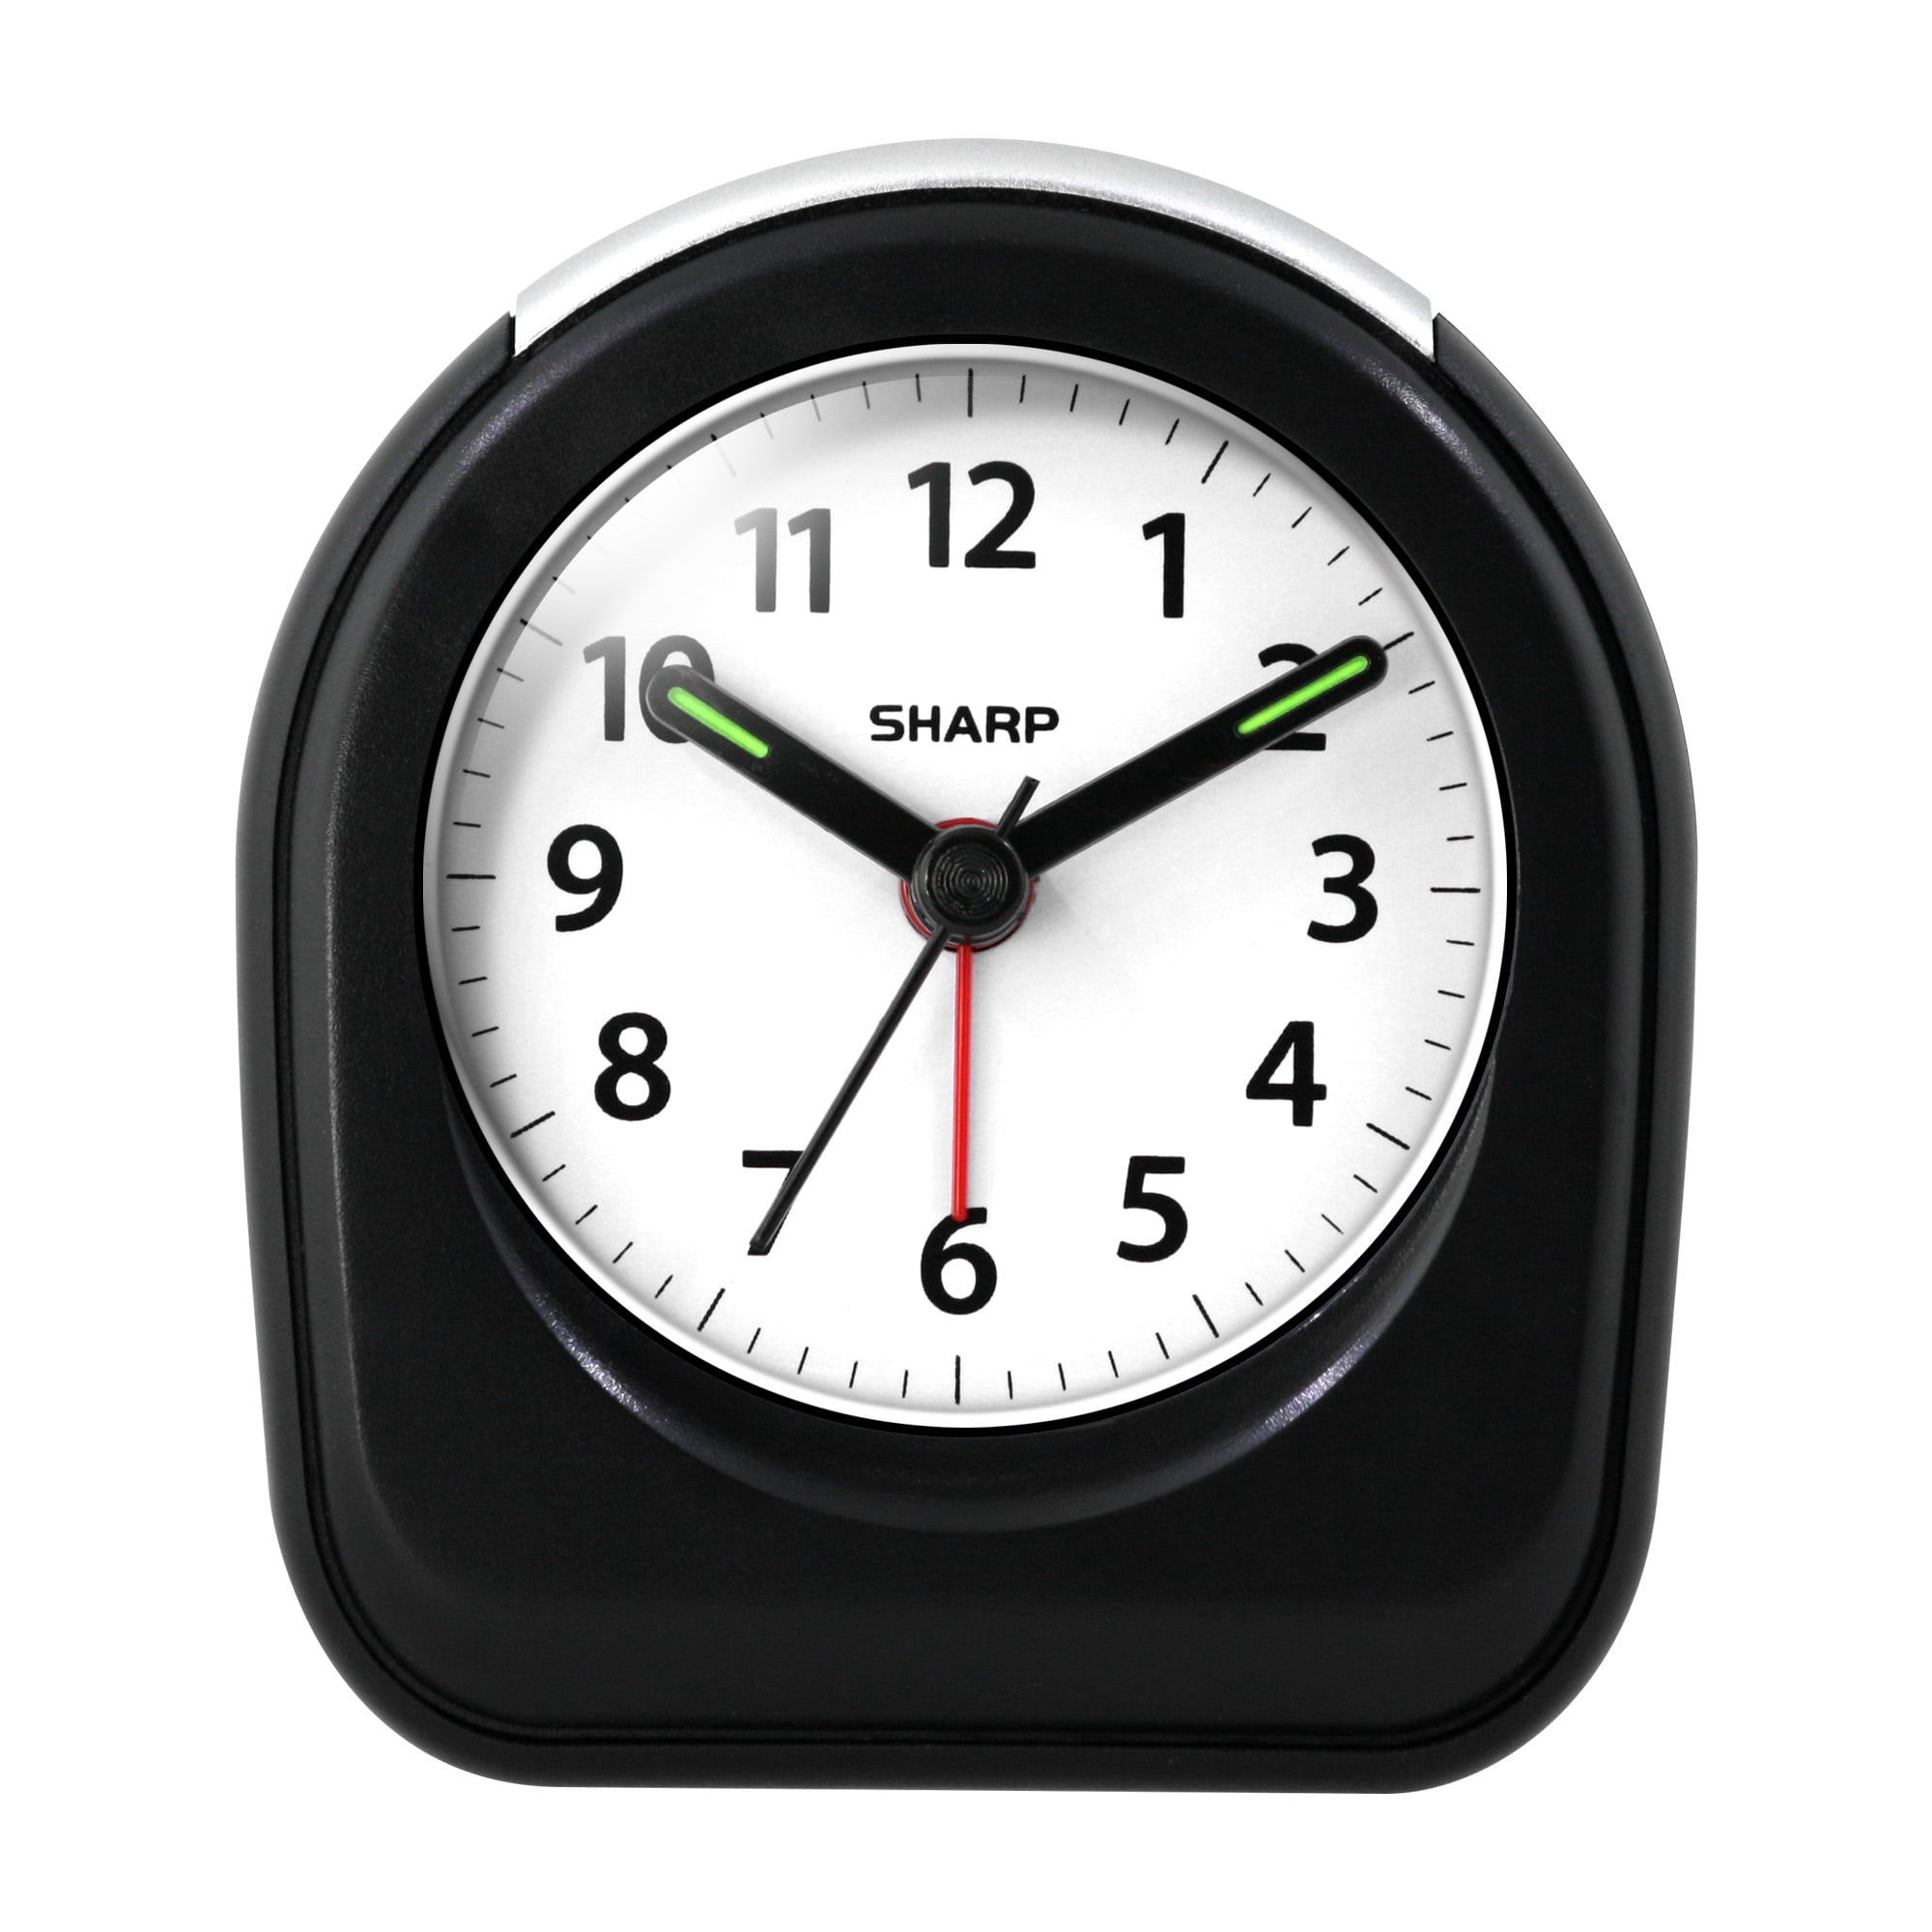 SHARP Quartz Analog Battery-Operated Travel Alarm Clock (Black) $4.55 at Walmart w/ Free Store Pickup (B&M only)